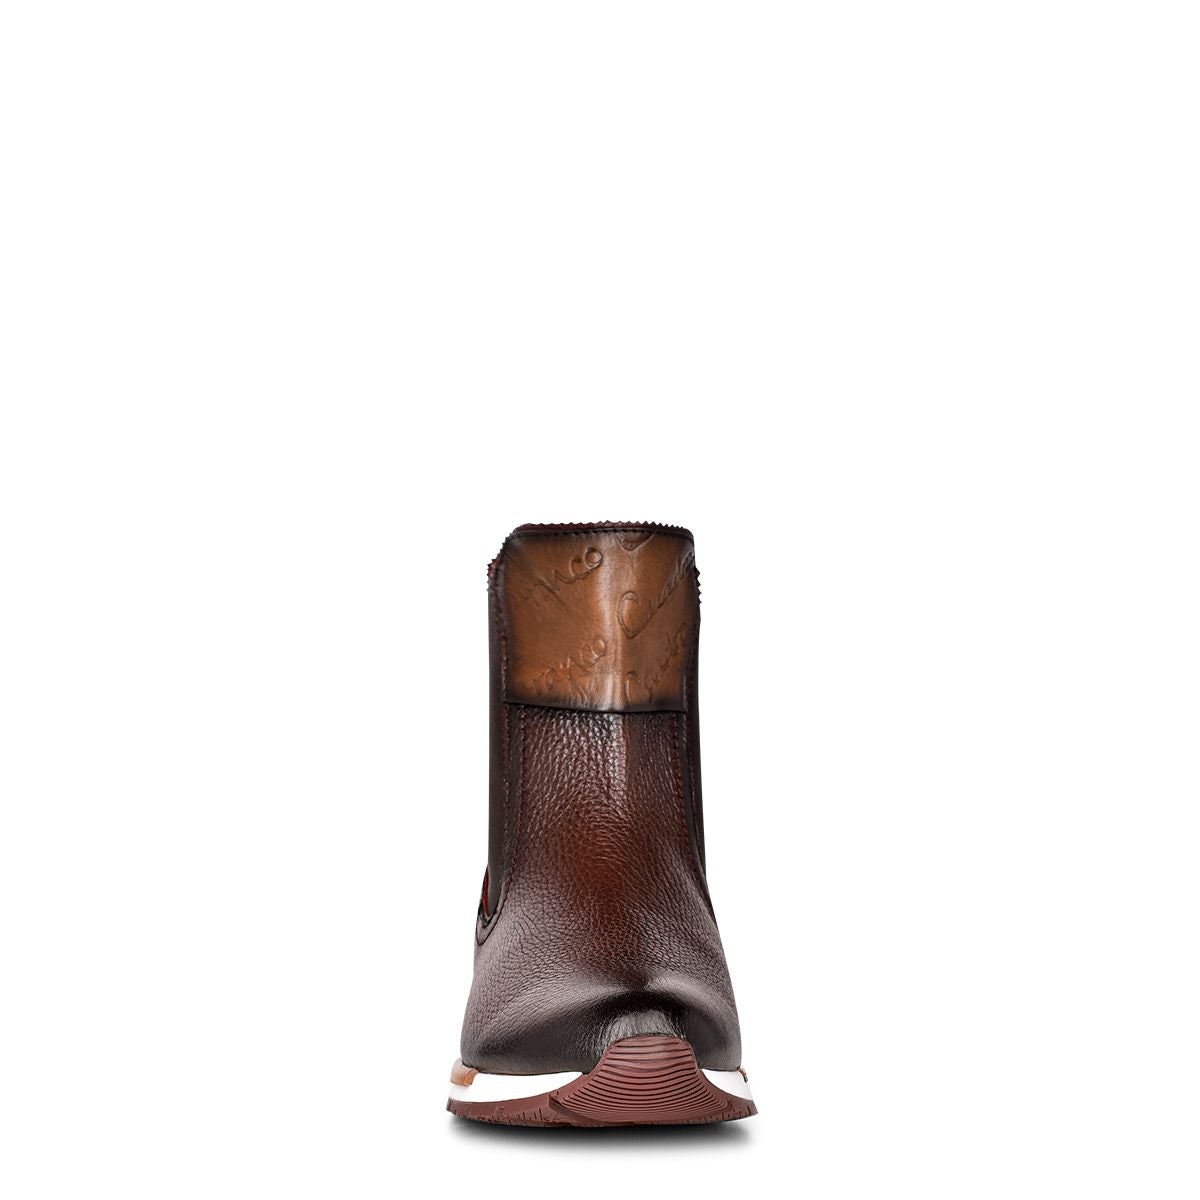 N50VNTS - Cuadra brown casual fashion deer leather sneaker boots for men-FRANCO CUADRA-Kuet-Cuadra-Boots